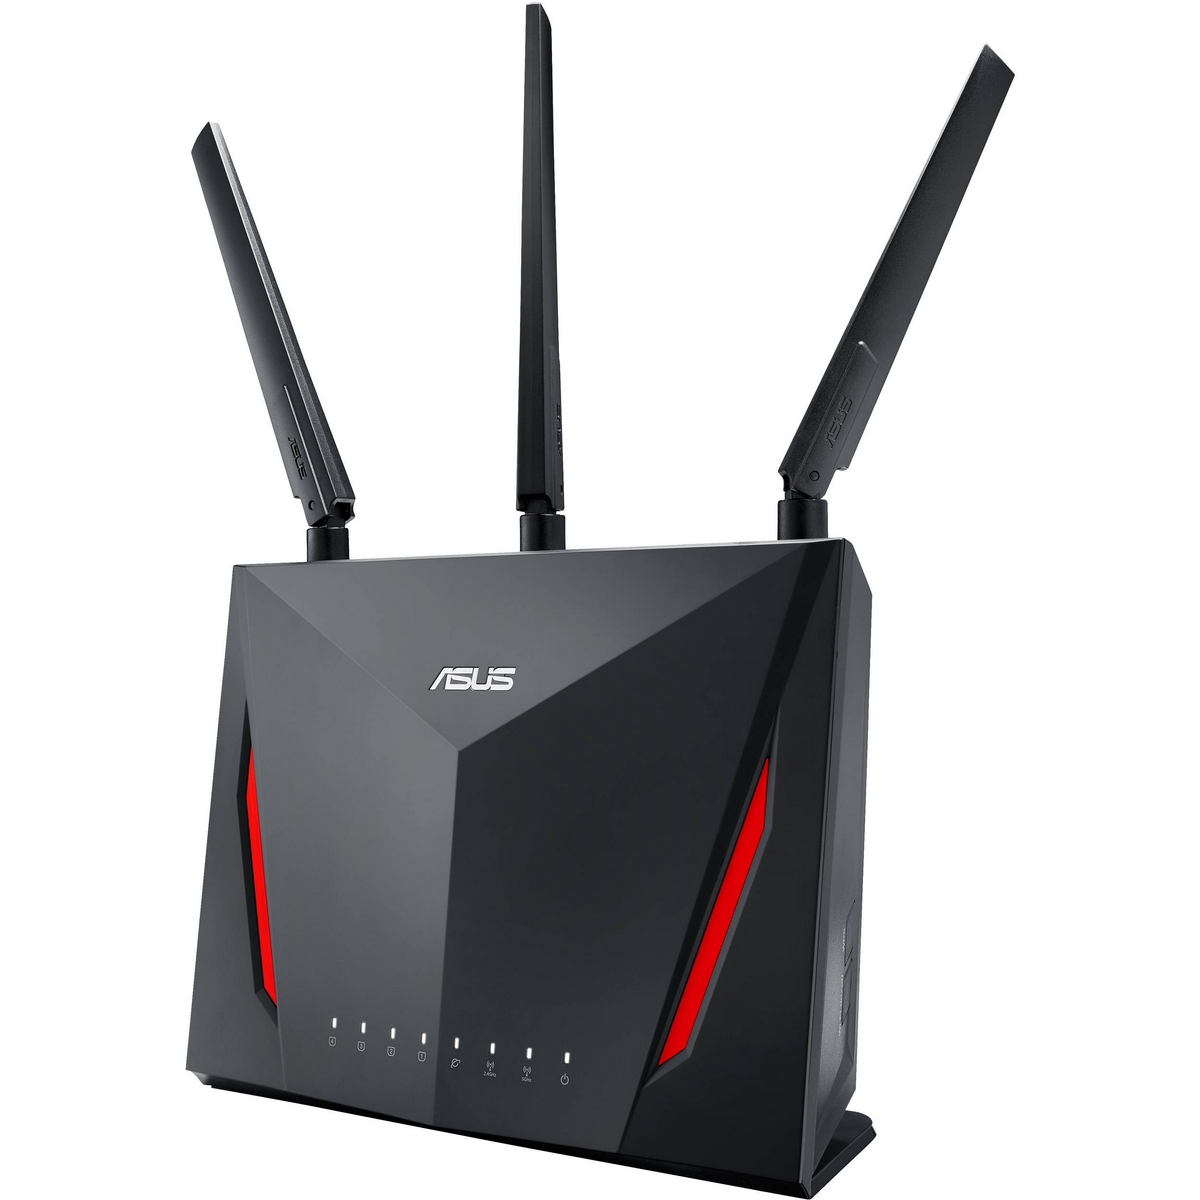 ASUS RT-AC86U Dual Band Wireless Router AC2900 WiFi with 4-port Gigabit LAN